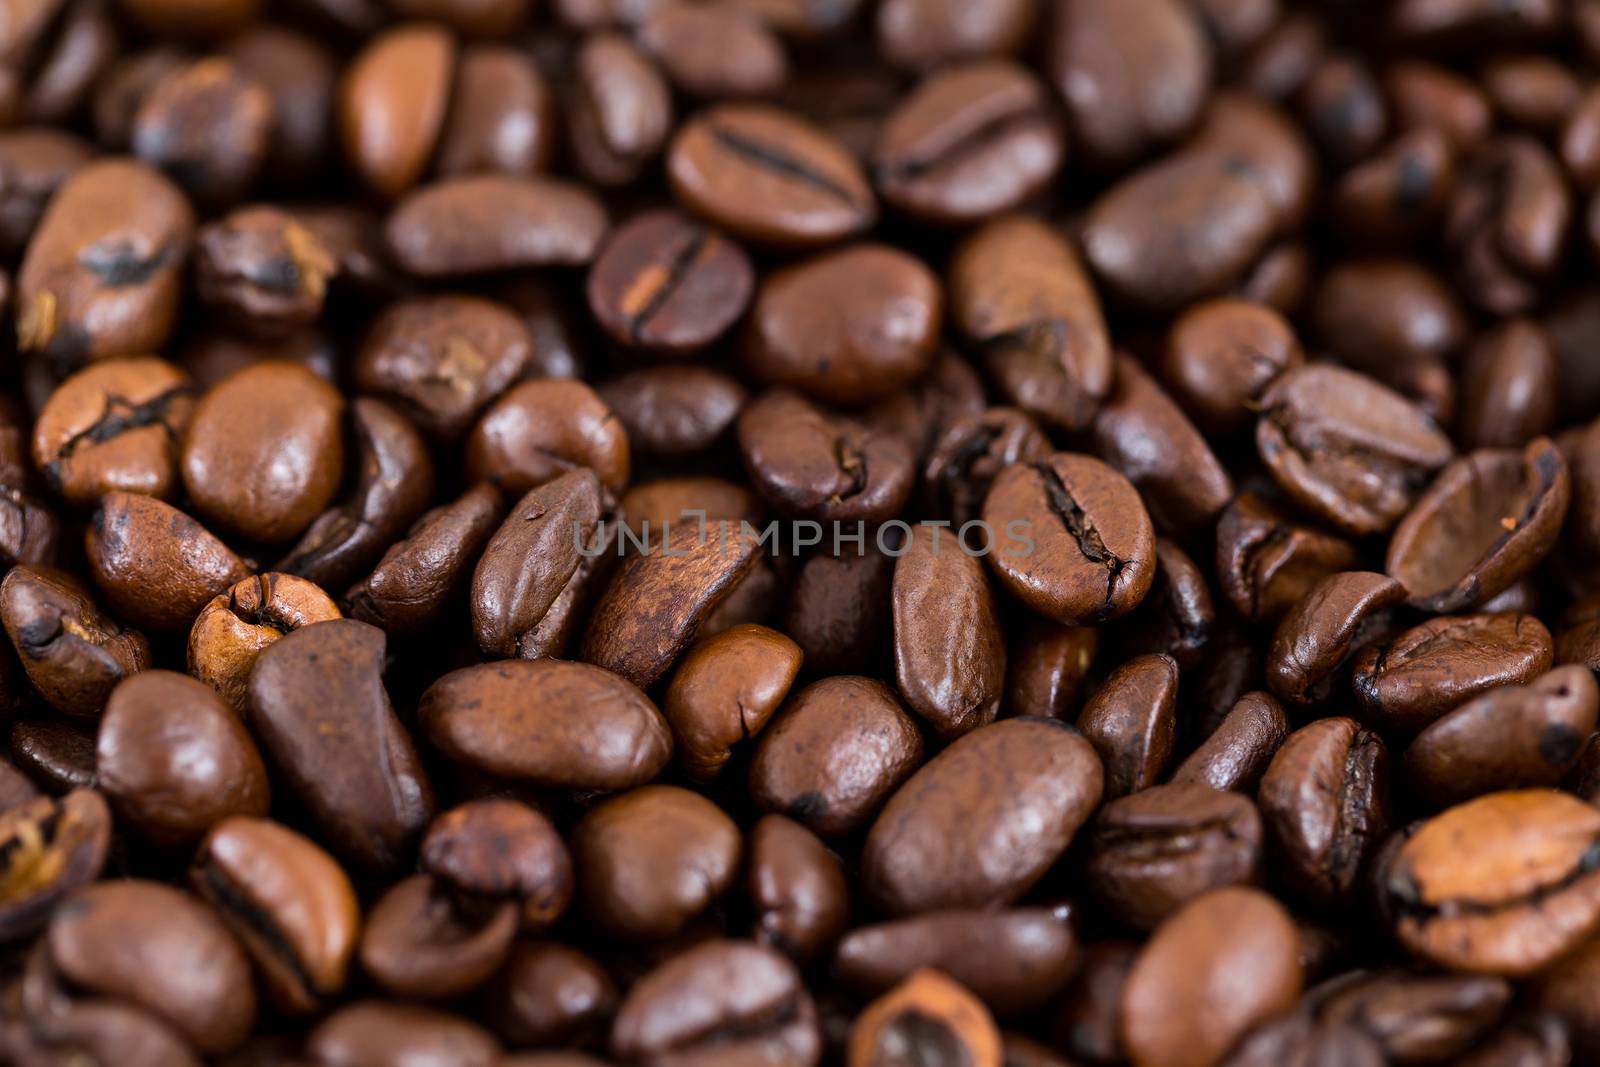 Roasted coffee bean by leungchopan